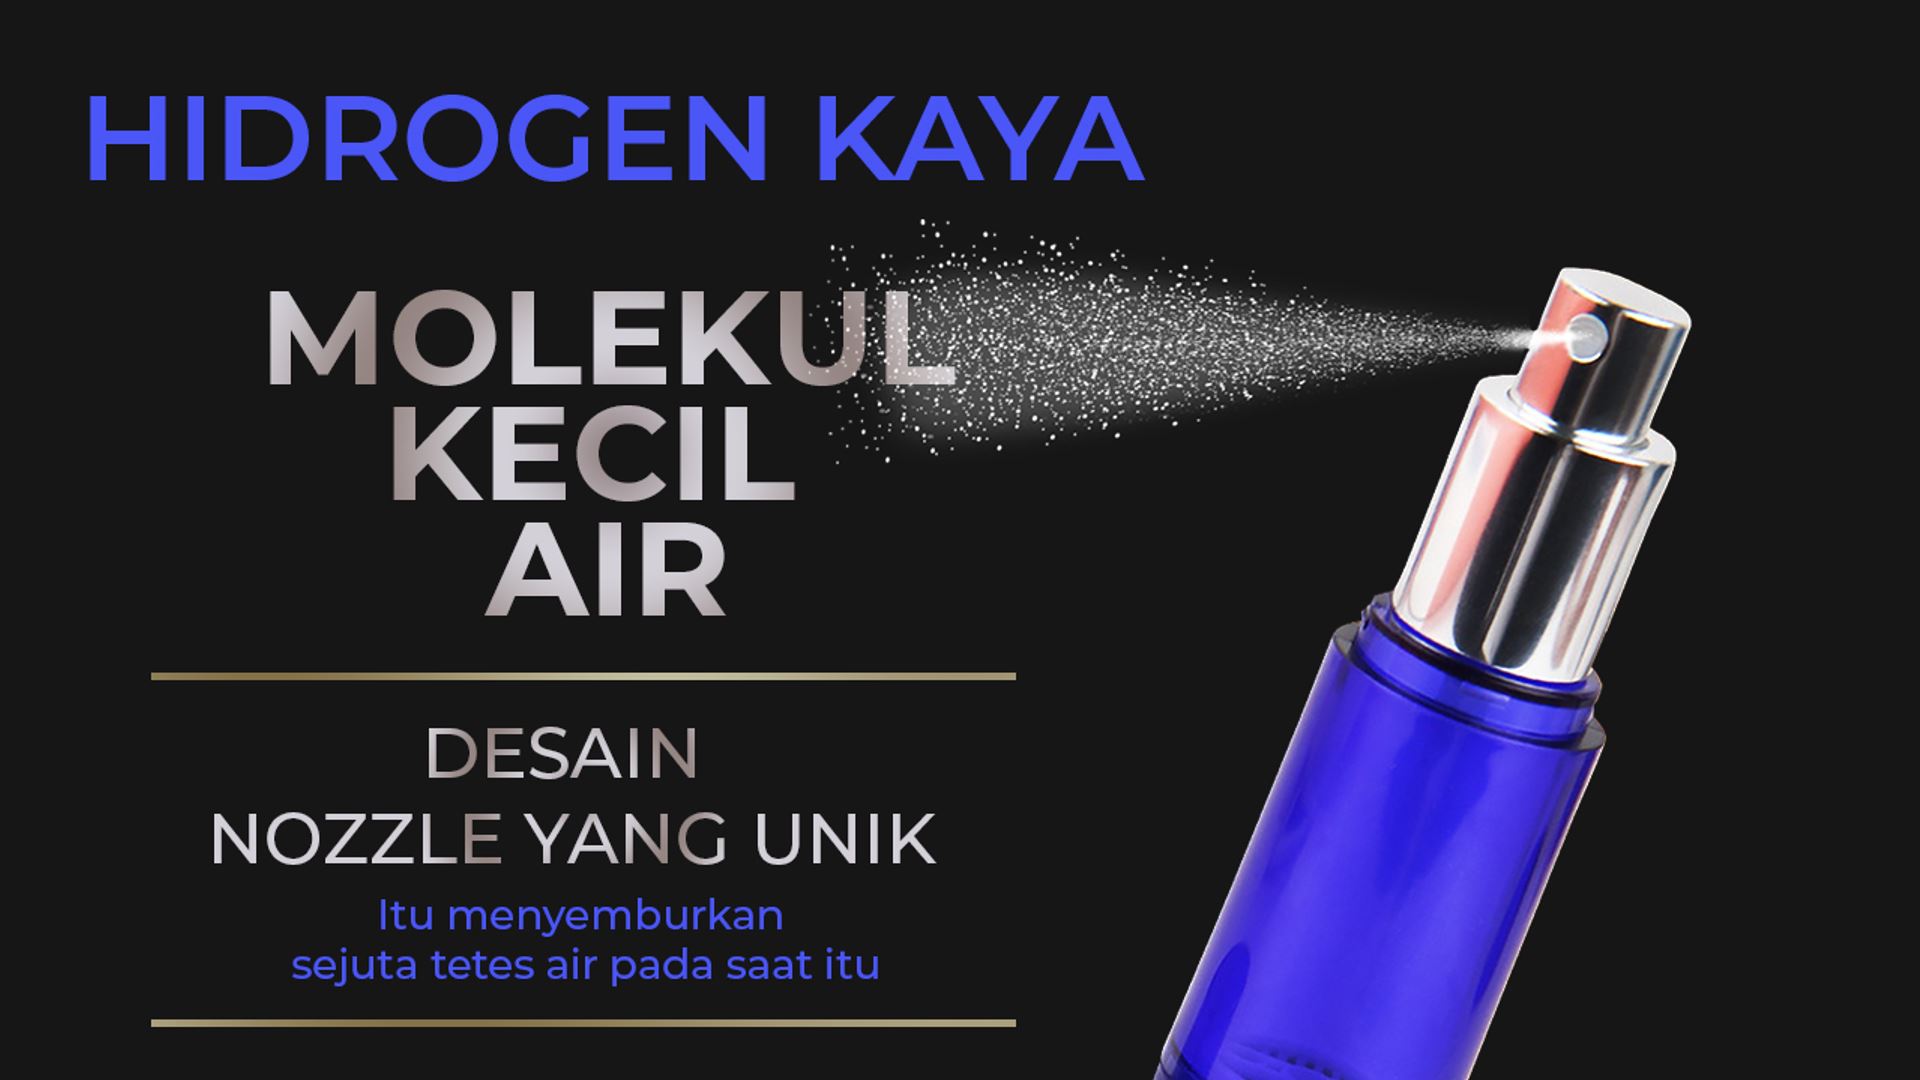 Hidromizu Spray - Kaya Molekul Kecil Air